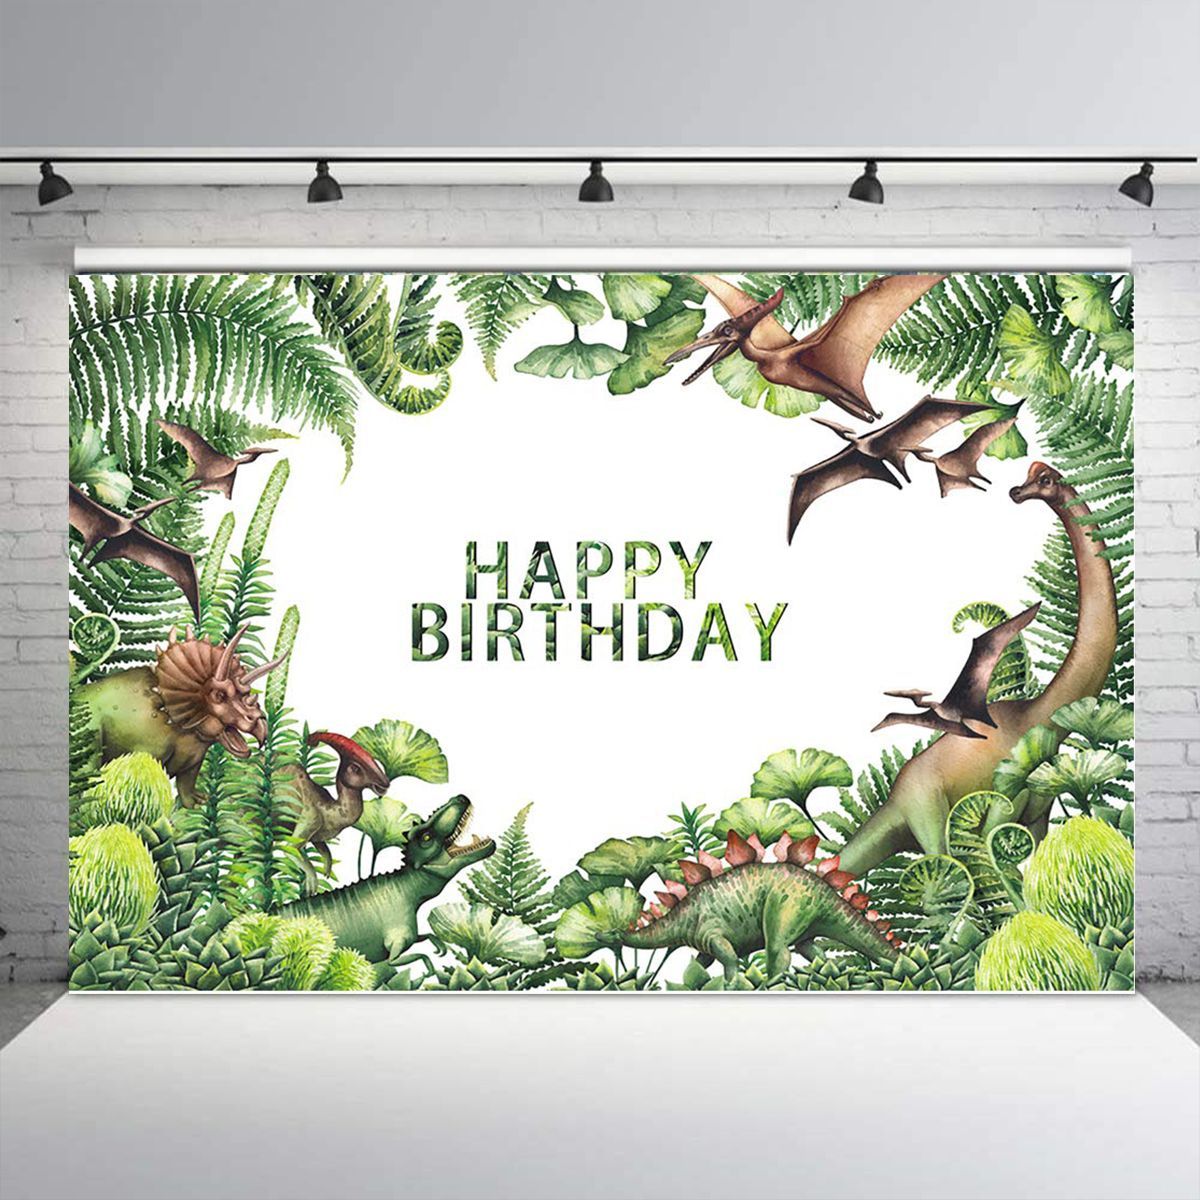 Dinosaur-Forest-Theme-Birthday-Backdrop-Vinyl-Studio-Backdrop-Photography-Props-Photo-Background-Dec-1635645